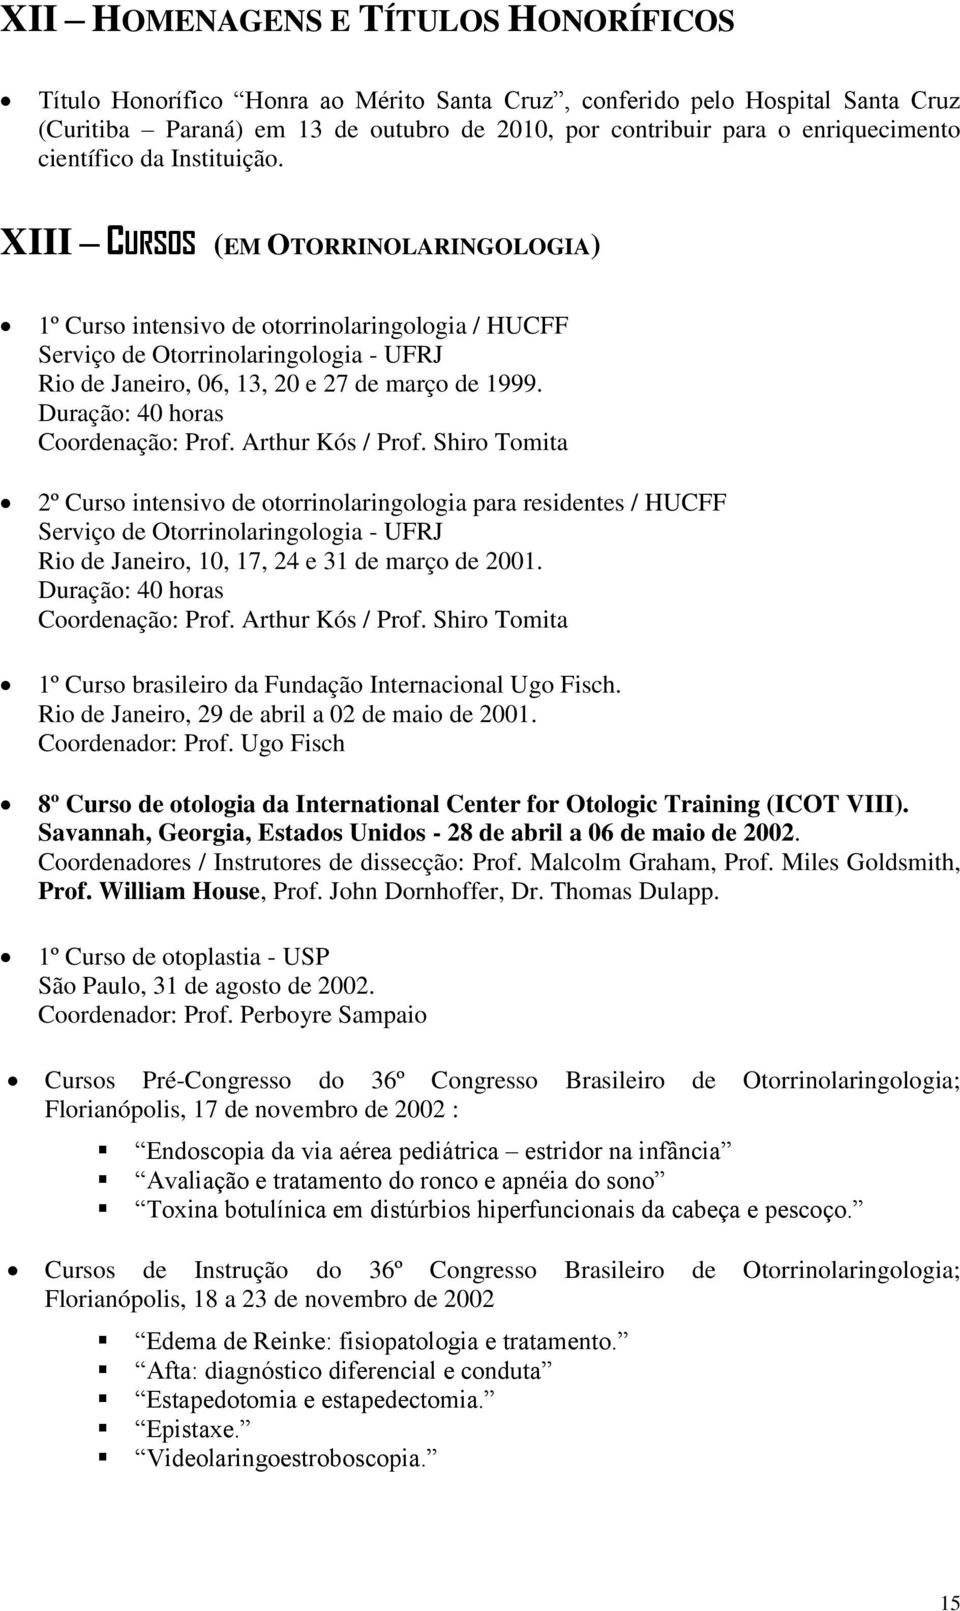 XIII CURSOS (EM OTORRINOLARINGOLOGIA) 1º Curso intensivo de otorrinolaringologia / HUCFF Serviço de Otorrinolaringologia - UFRJ Rio de Janeiro, 06, 13, 20 e 27 de março de 1999.